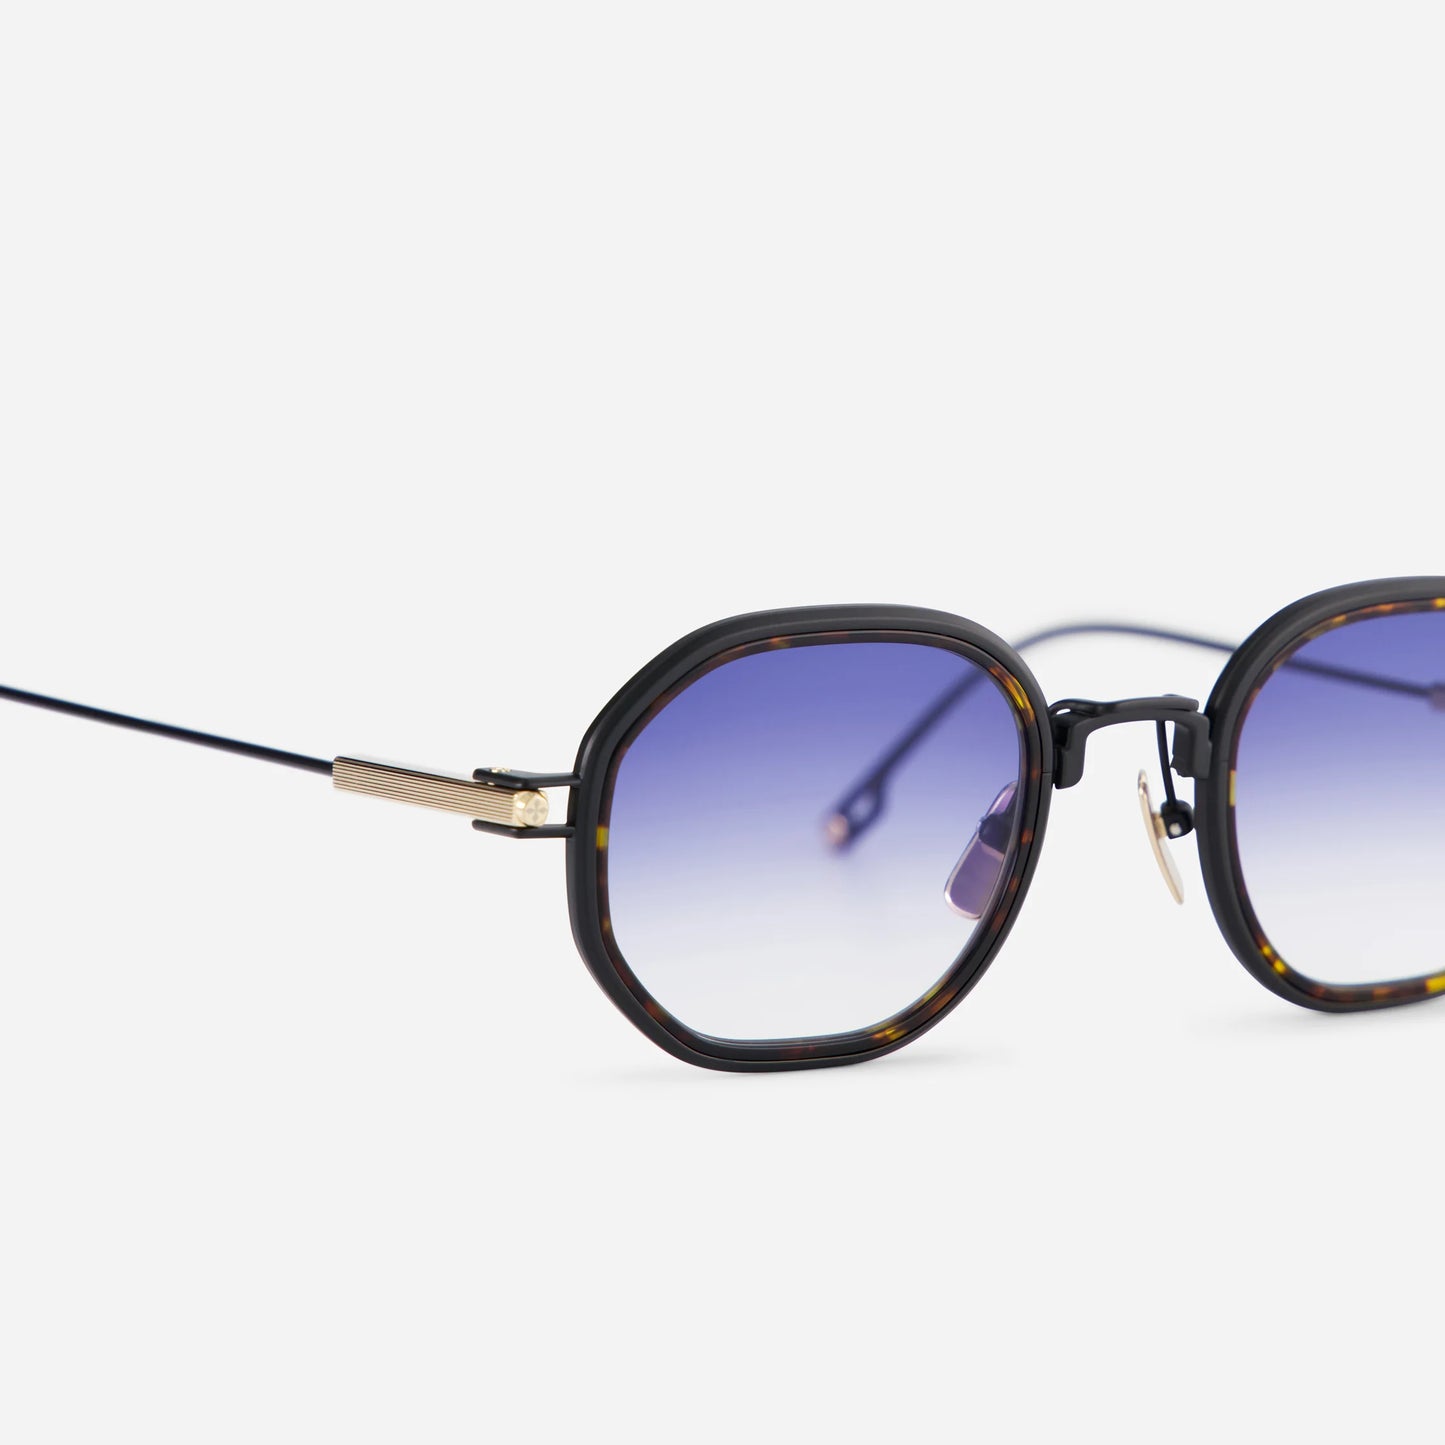 Toliman-T S3306 hexagonal sunglasses. Crafted in pure black titanium, these unique eyewear pieces showcase dark blue gradient lenses and a captivating tortoise insert.